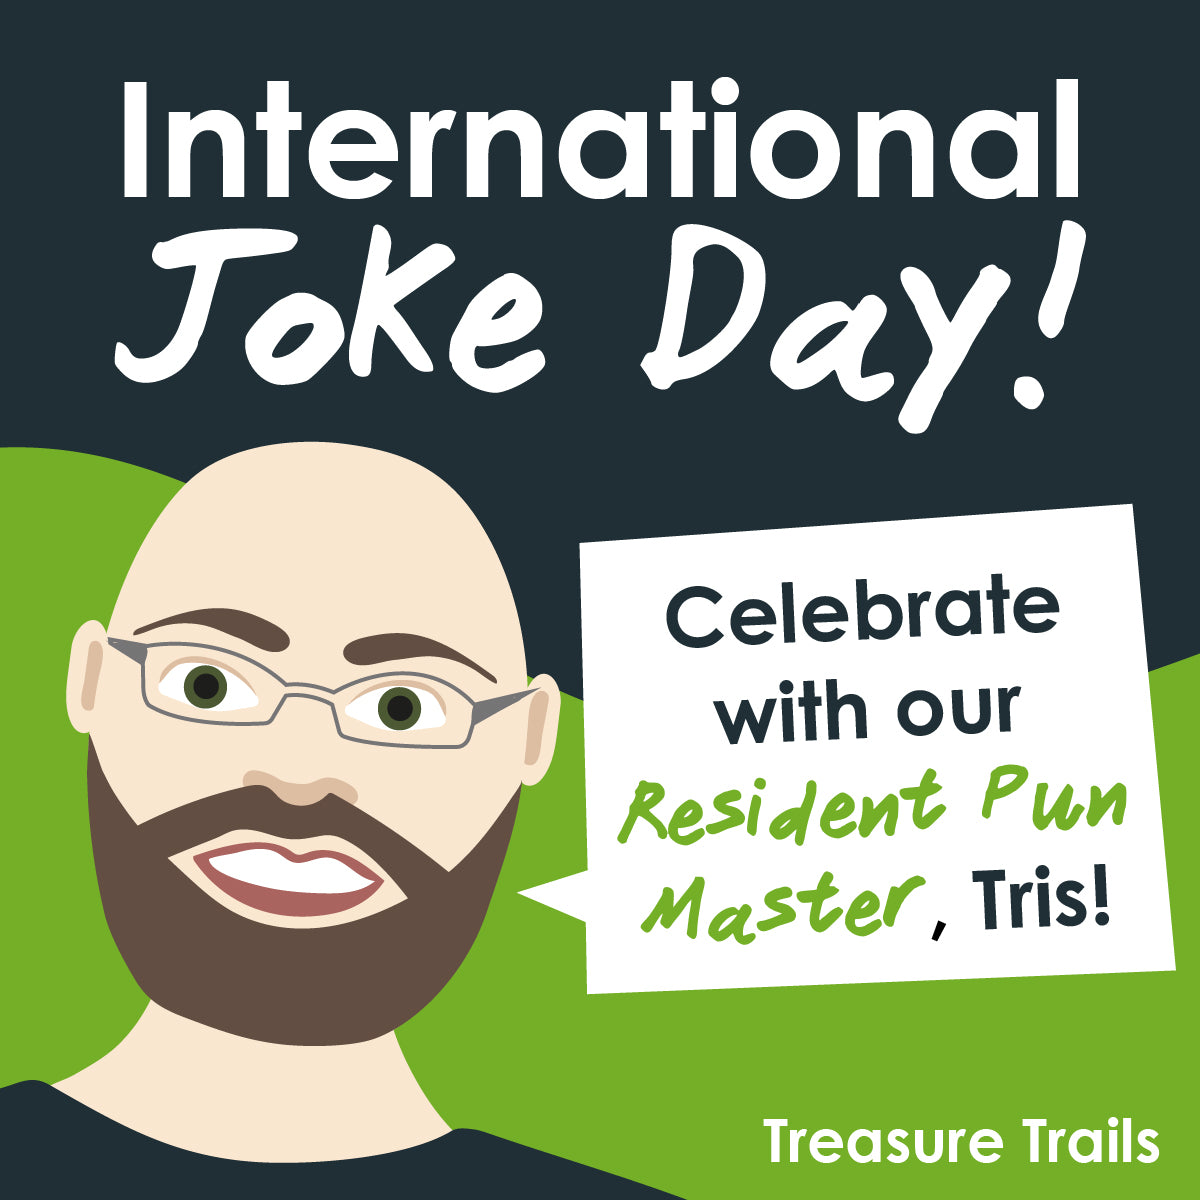 International Joke Day! Celebrate with our Resident Pun Master, Tris!